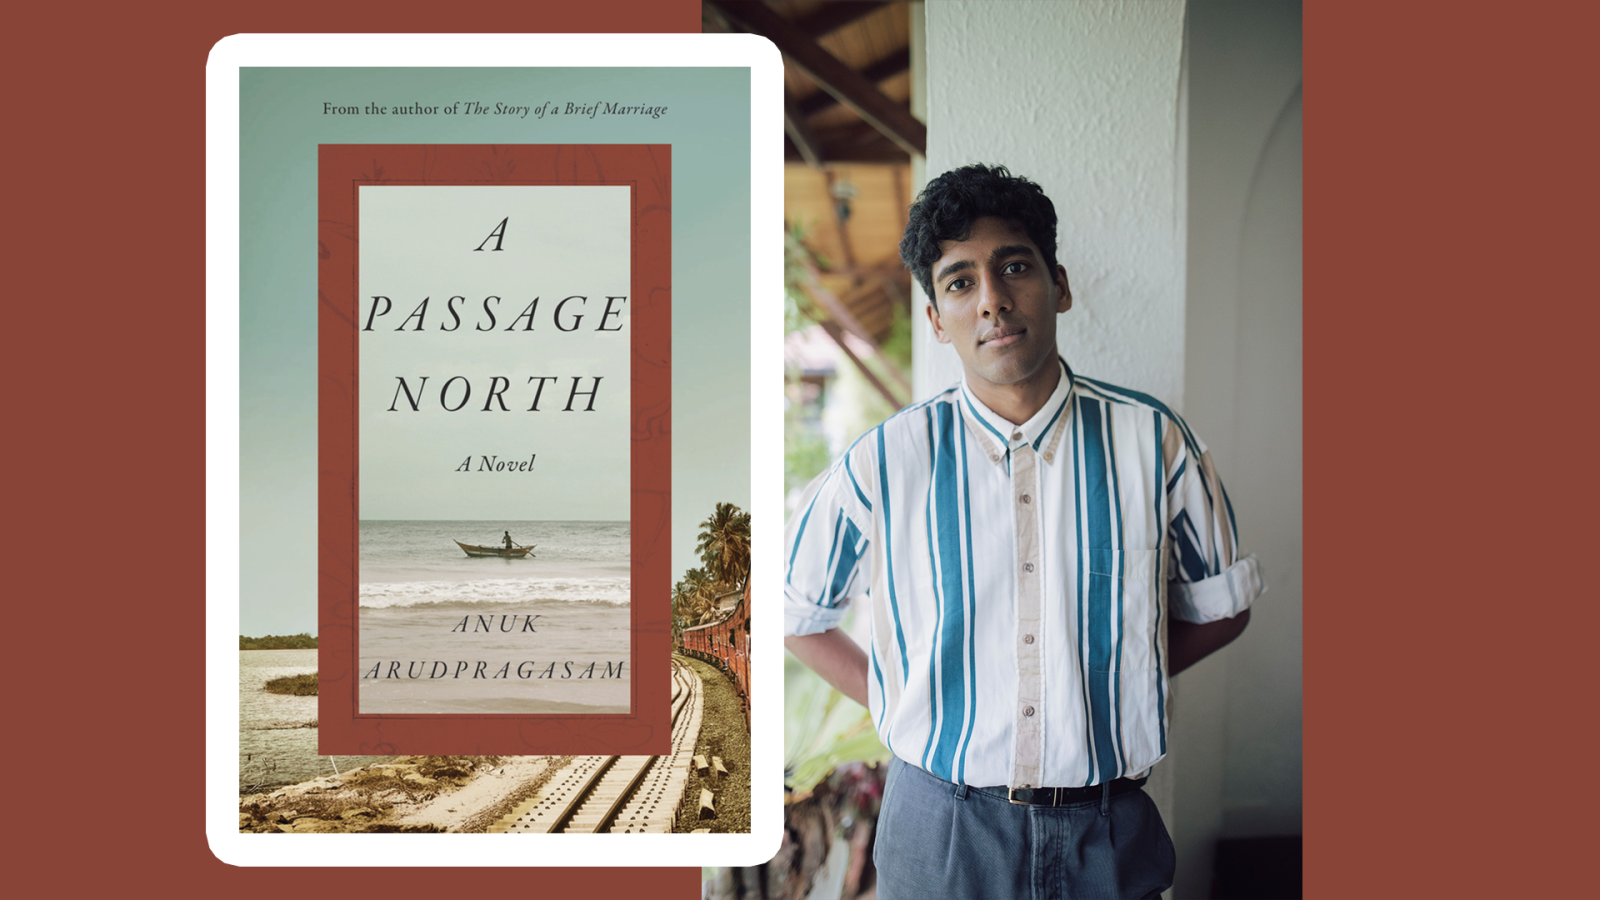 Anuk Arudpragasam's "A Passage North"